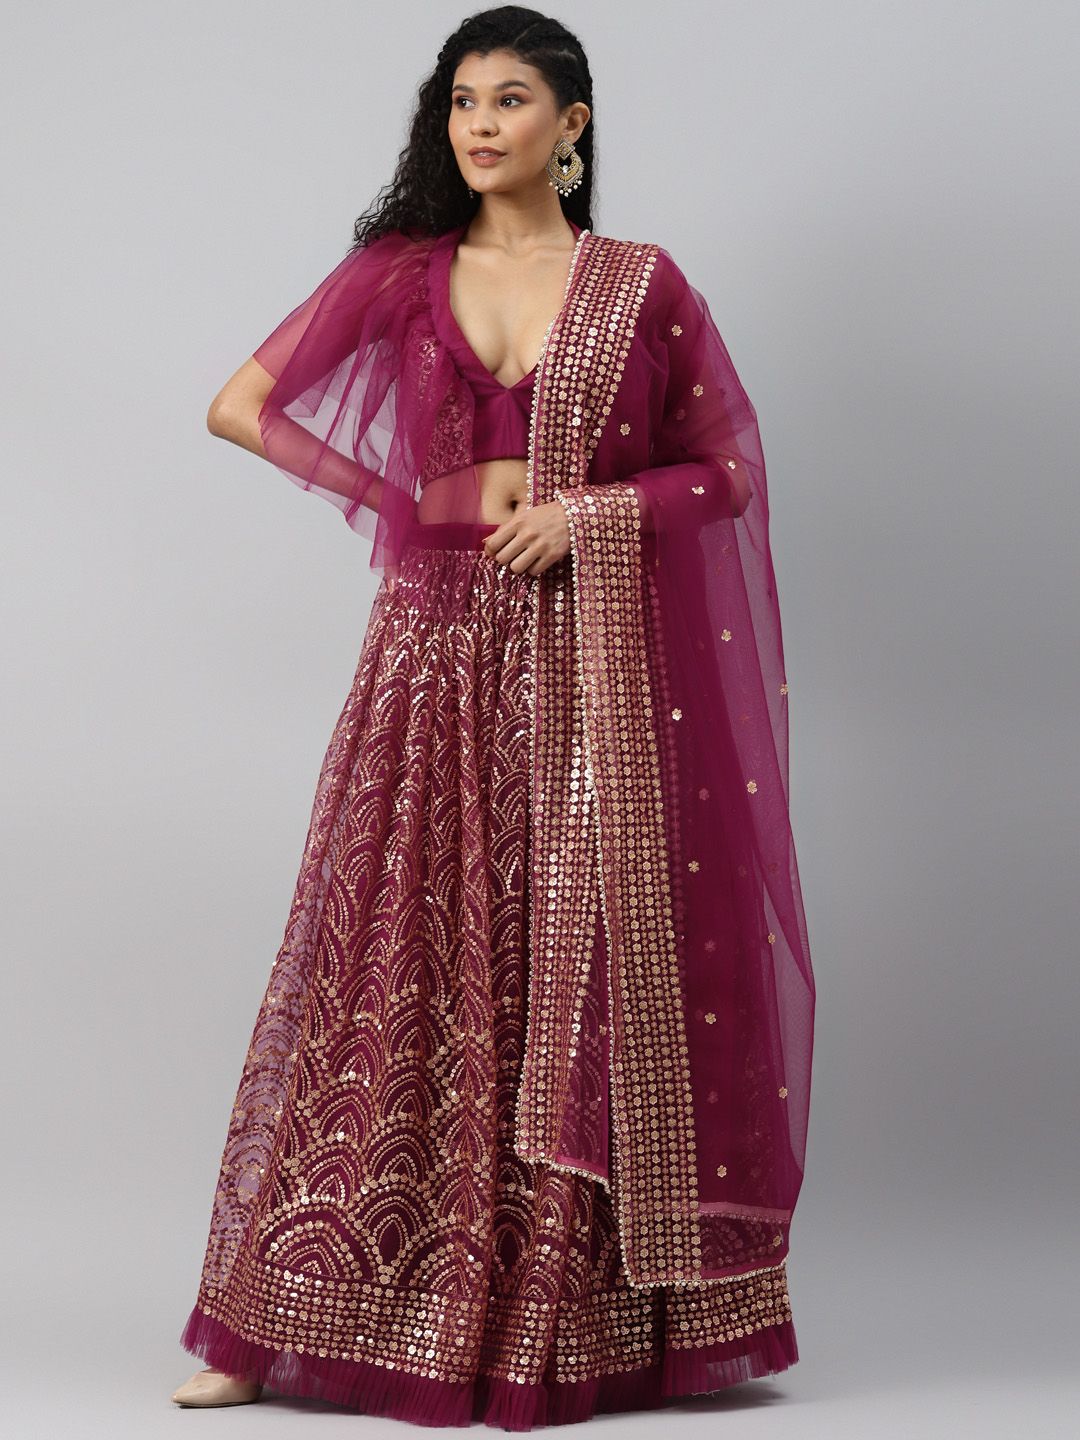 Readiprint Fashions Magenta & Golden Semi-Stitched Lehenga & Blouse with Dupatta Price in India